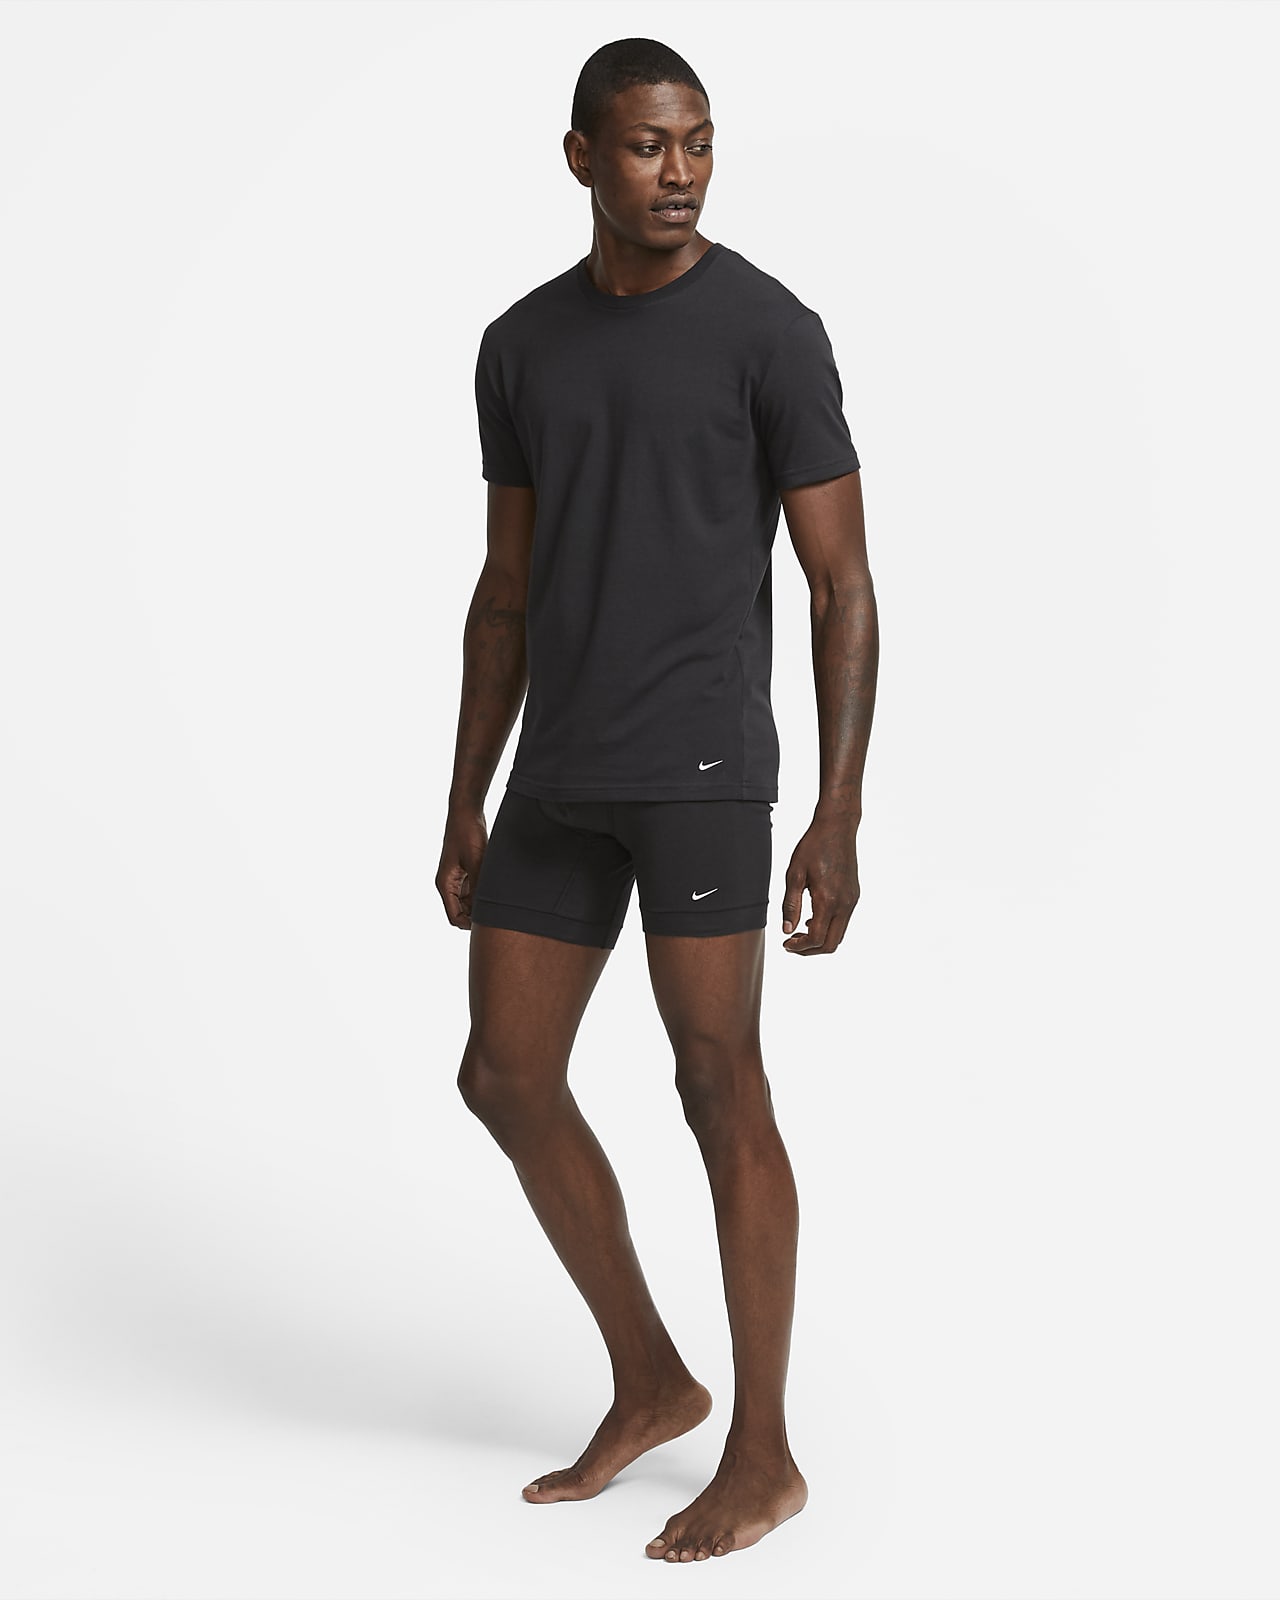 Nike Everyday Cotton Stretch Men's Slim Fit Crew-Neck Undershirt (2 ...